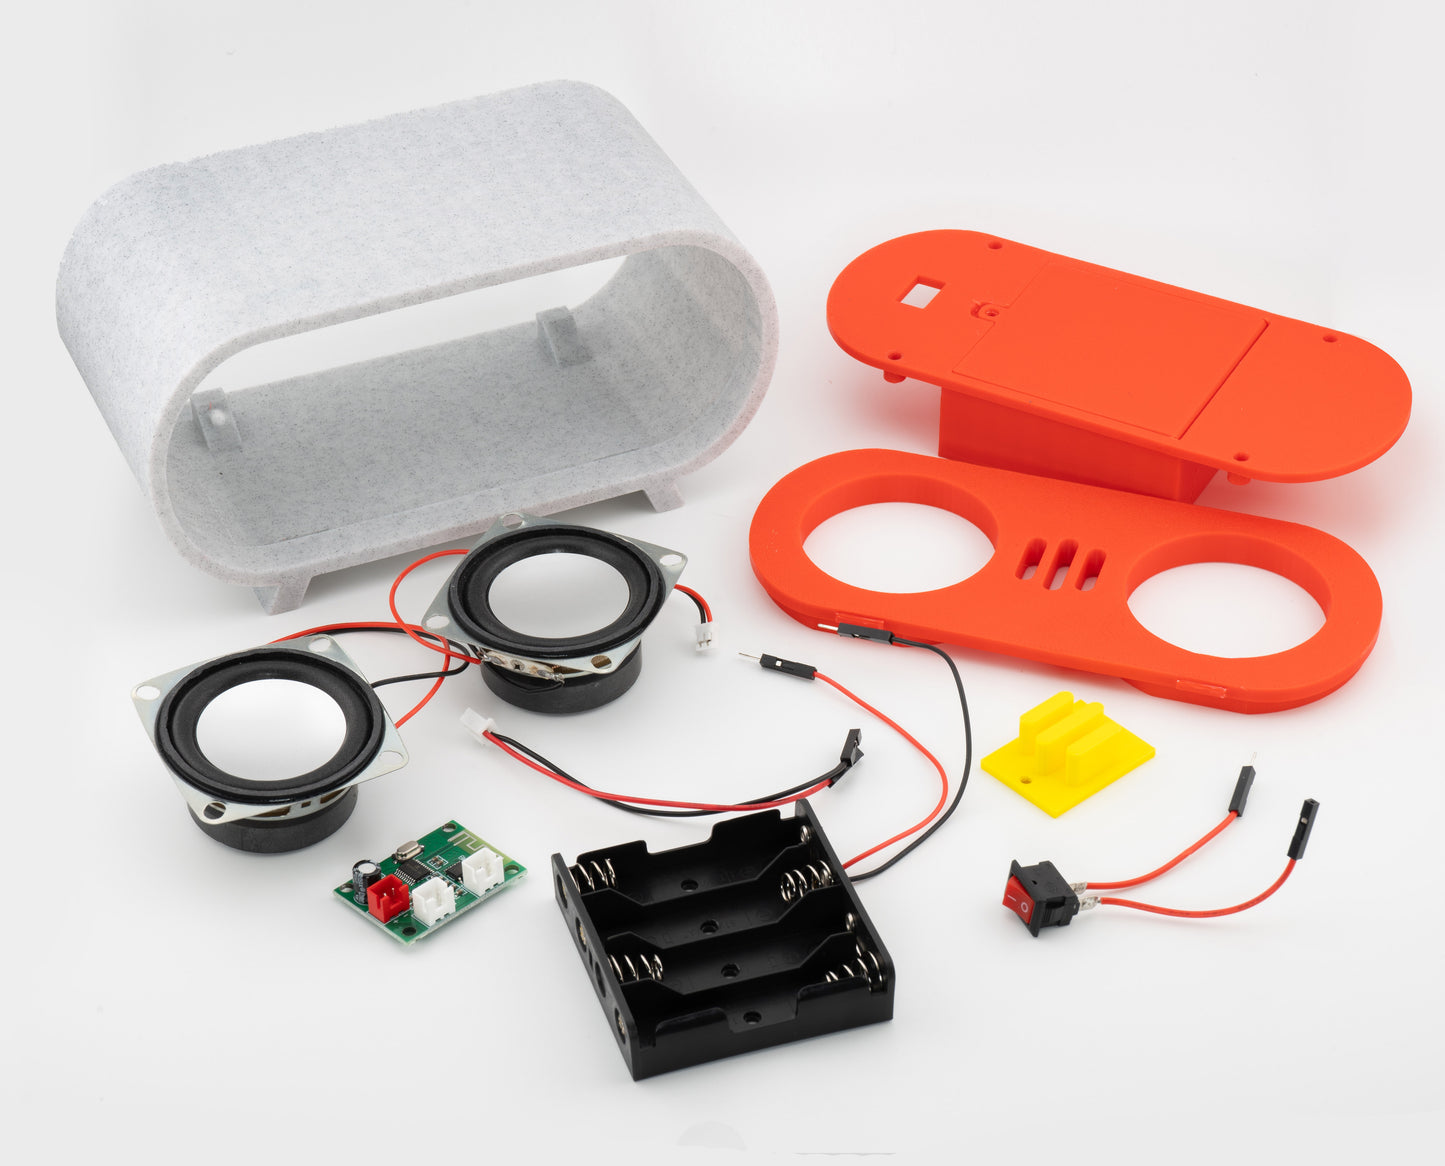 DIY Bluetooth Speaker - STEM Project